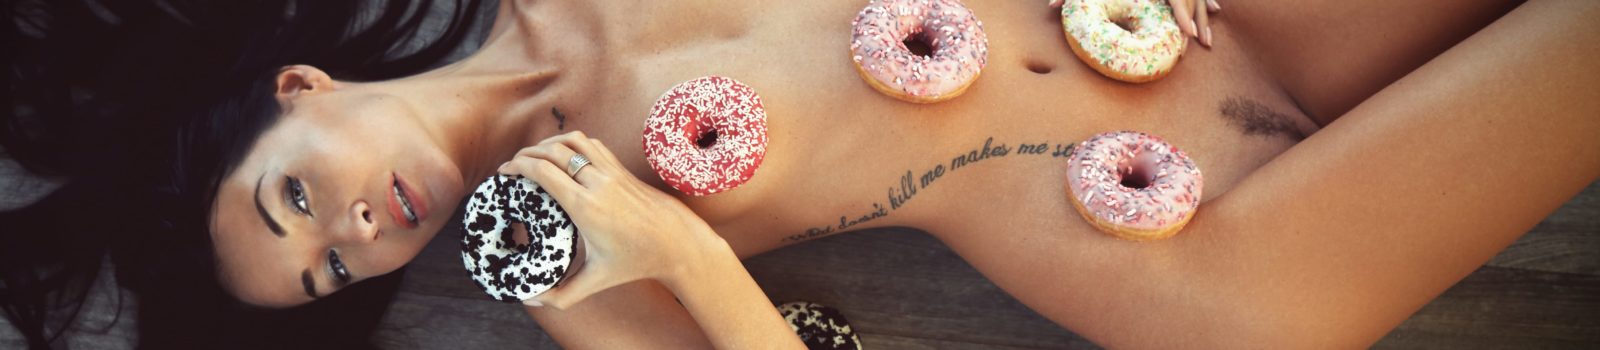 Donut girl